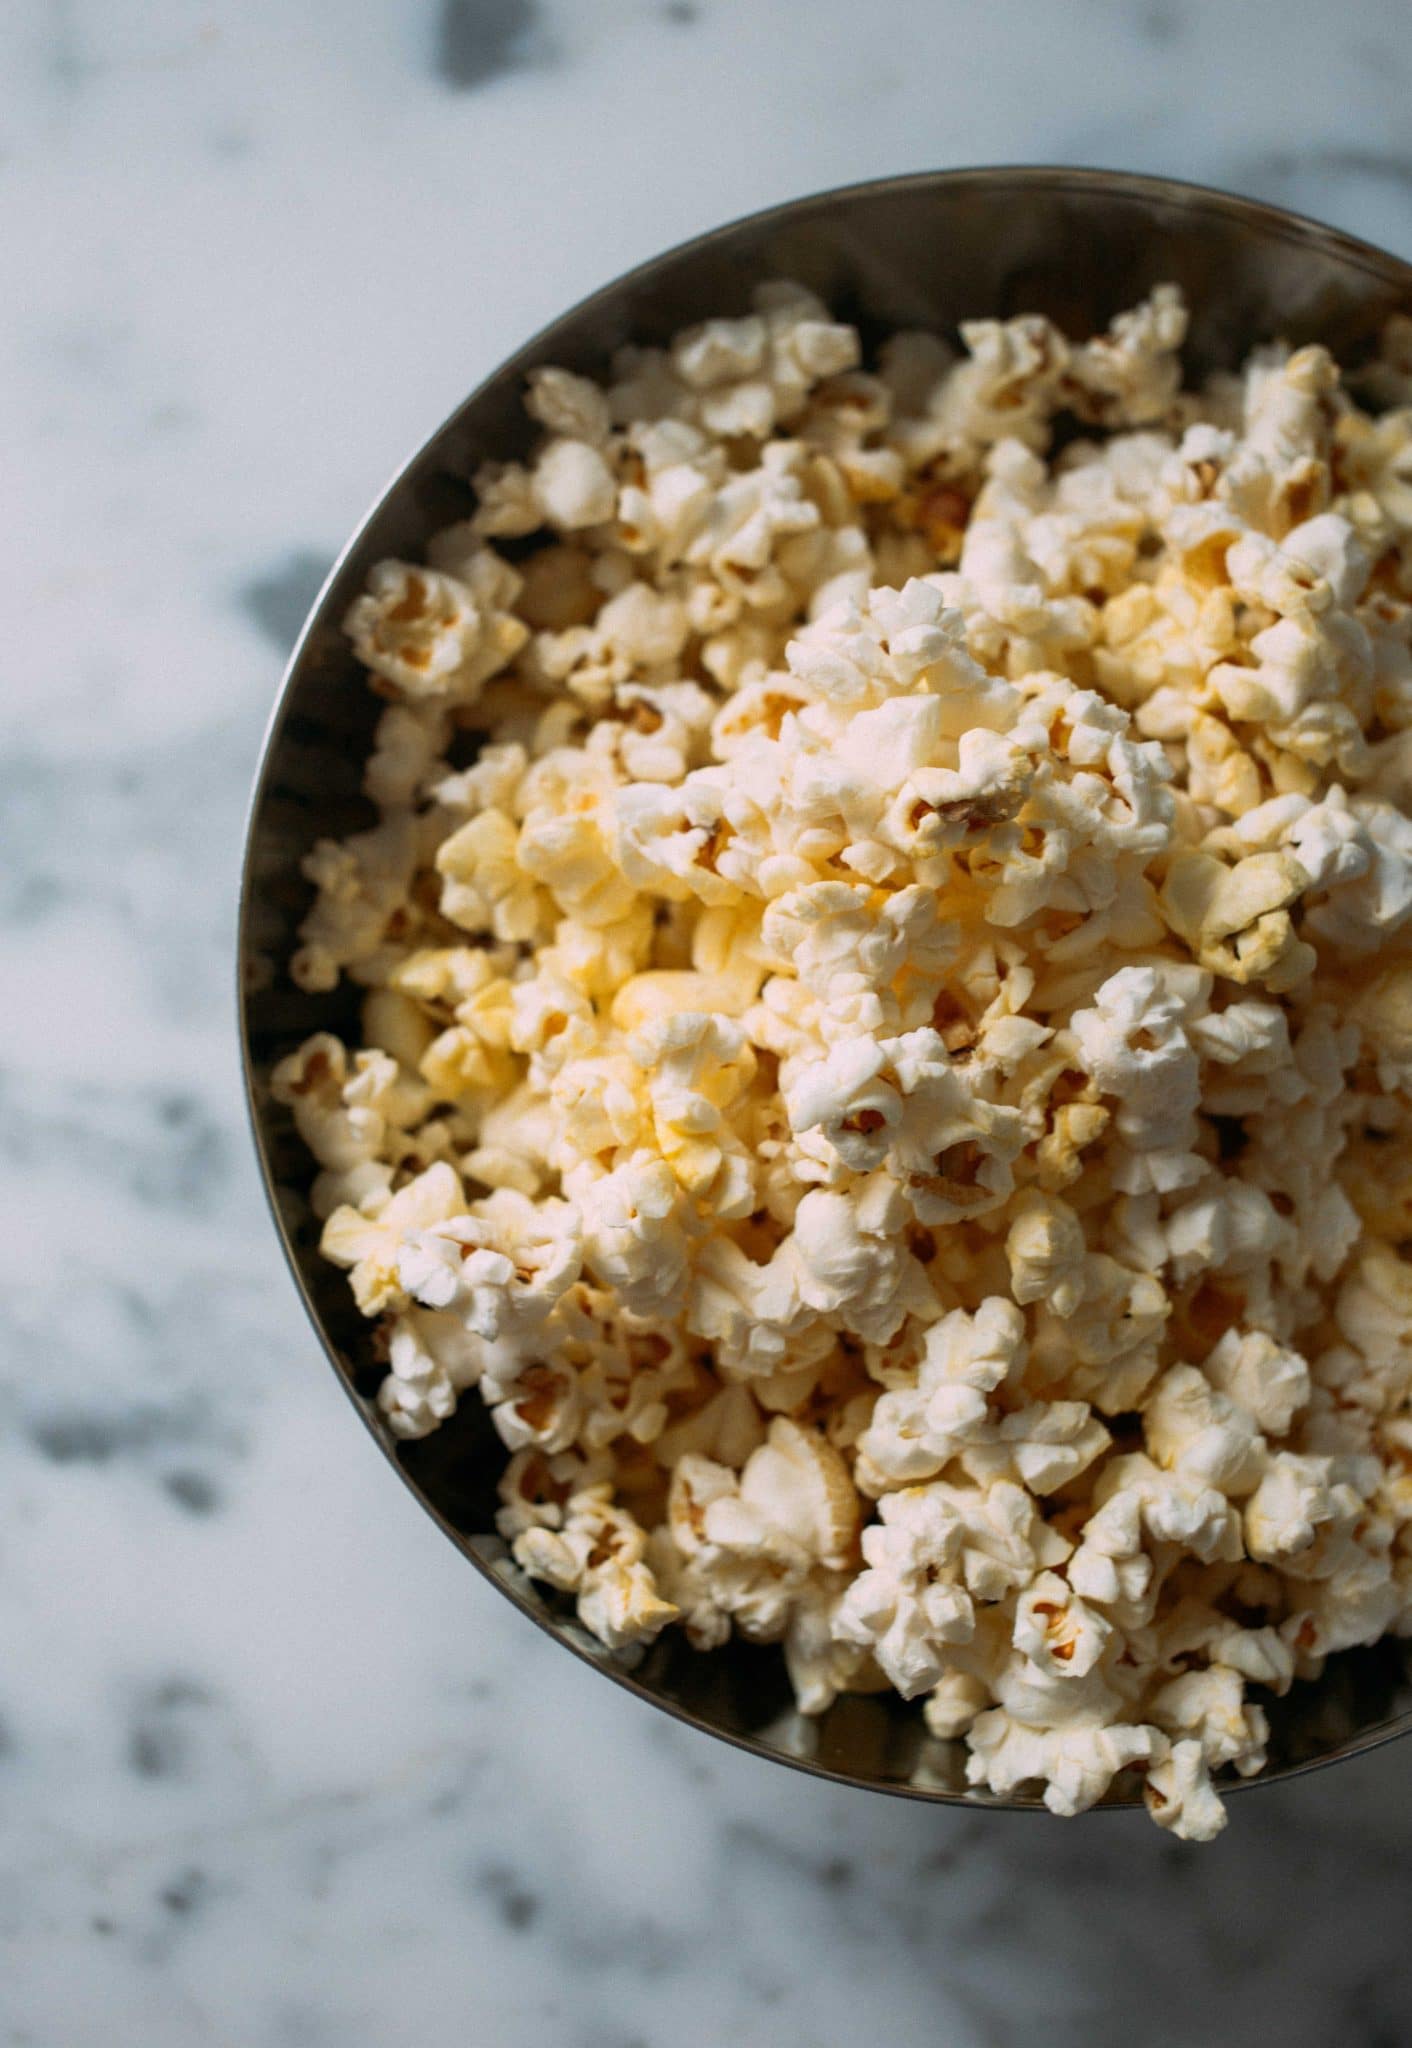 plastic-free popcorn ready to snack on